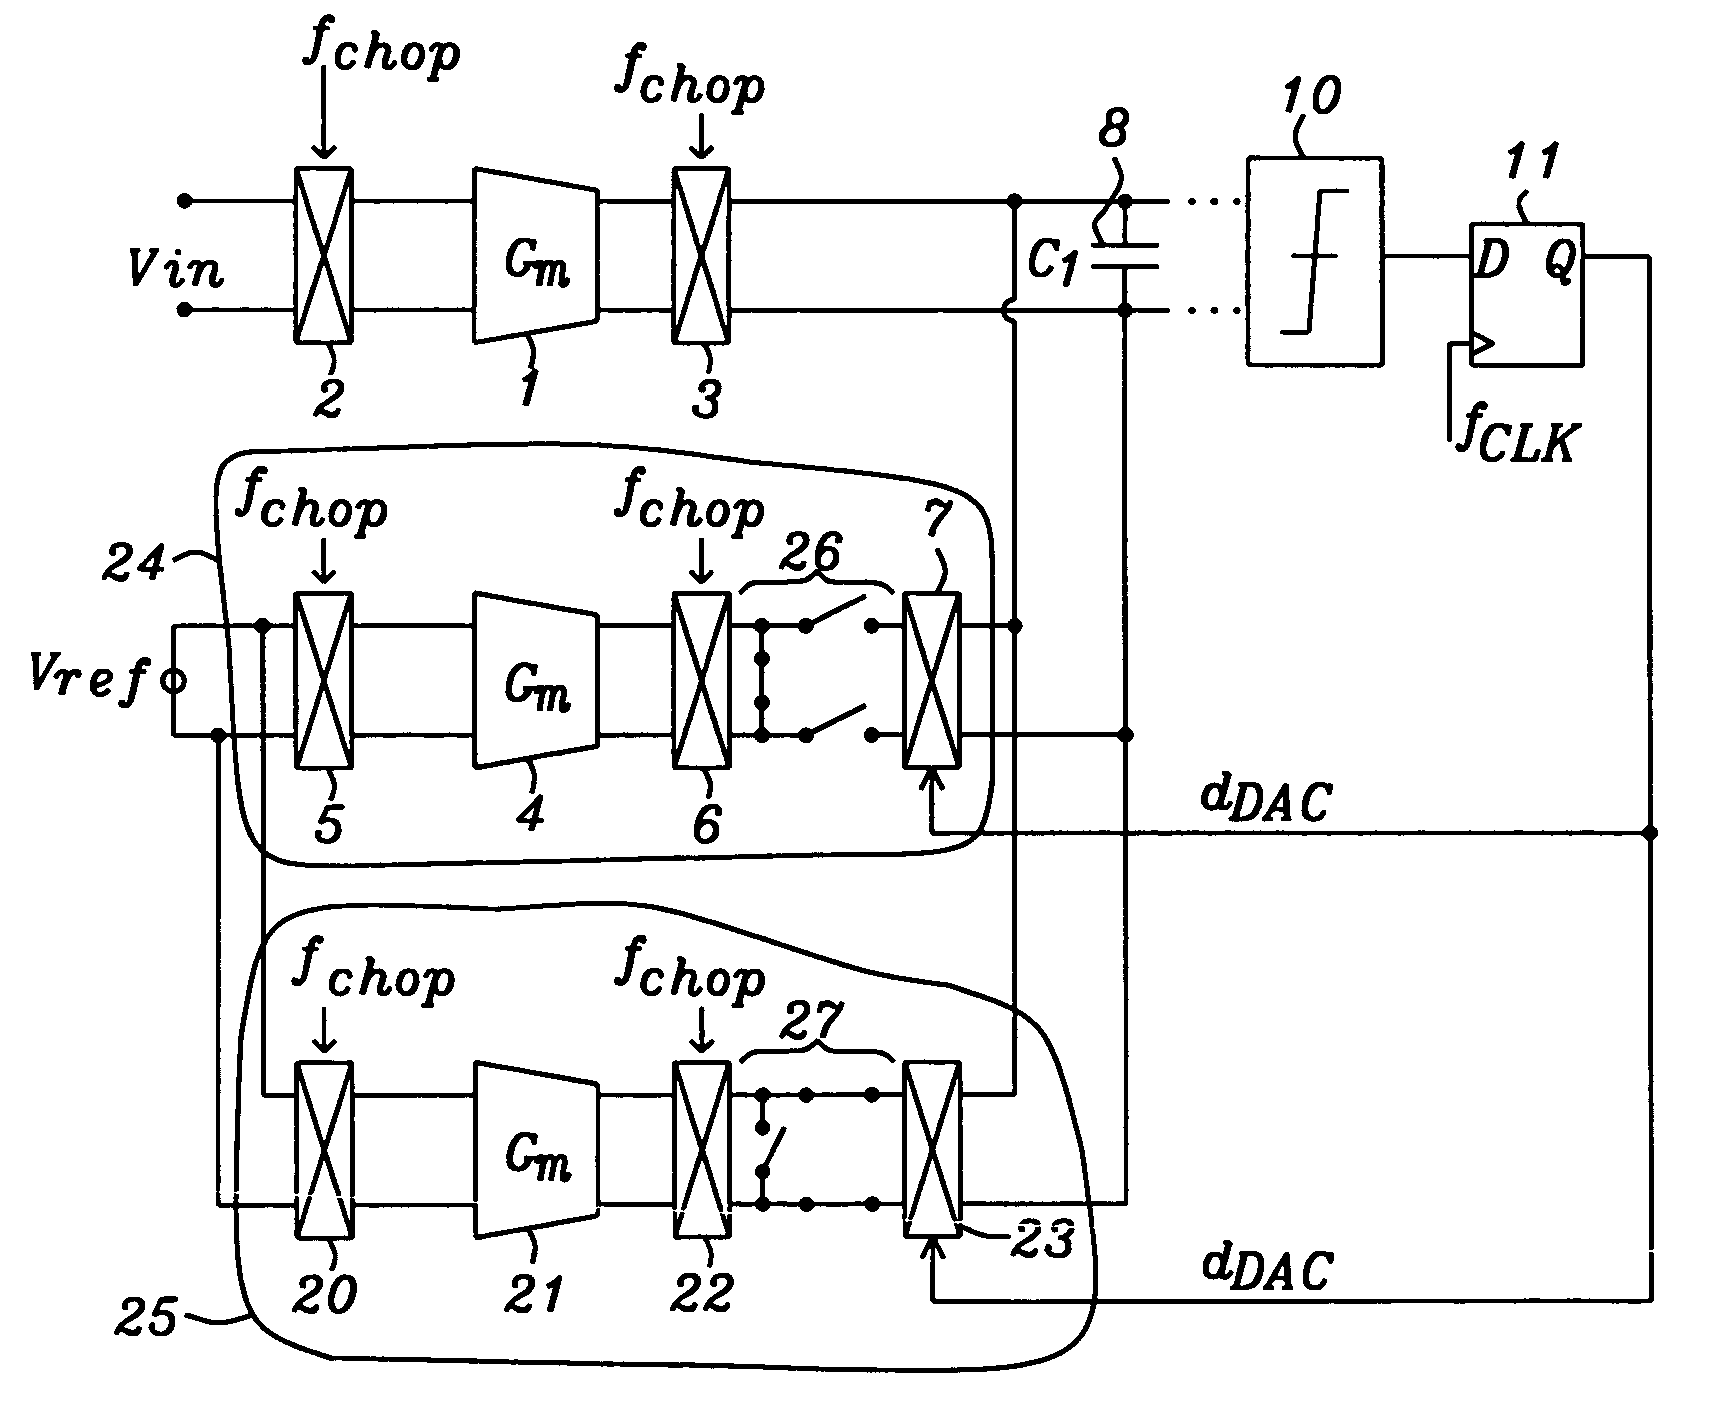 Sigma-delta modulator